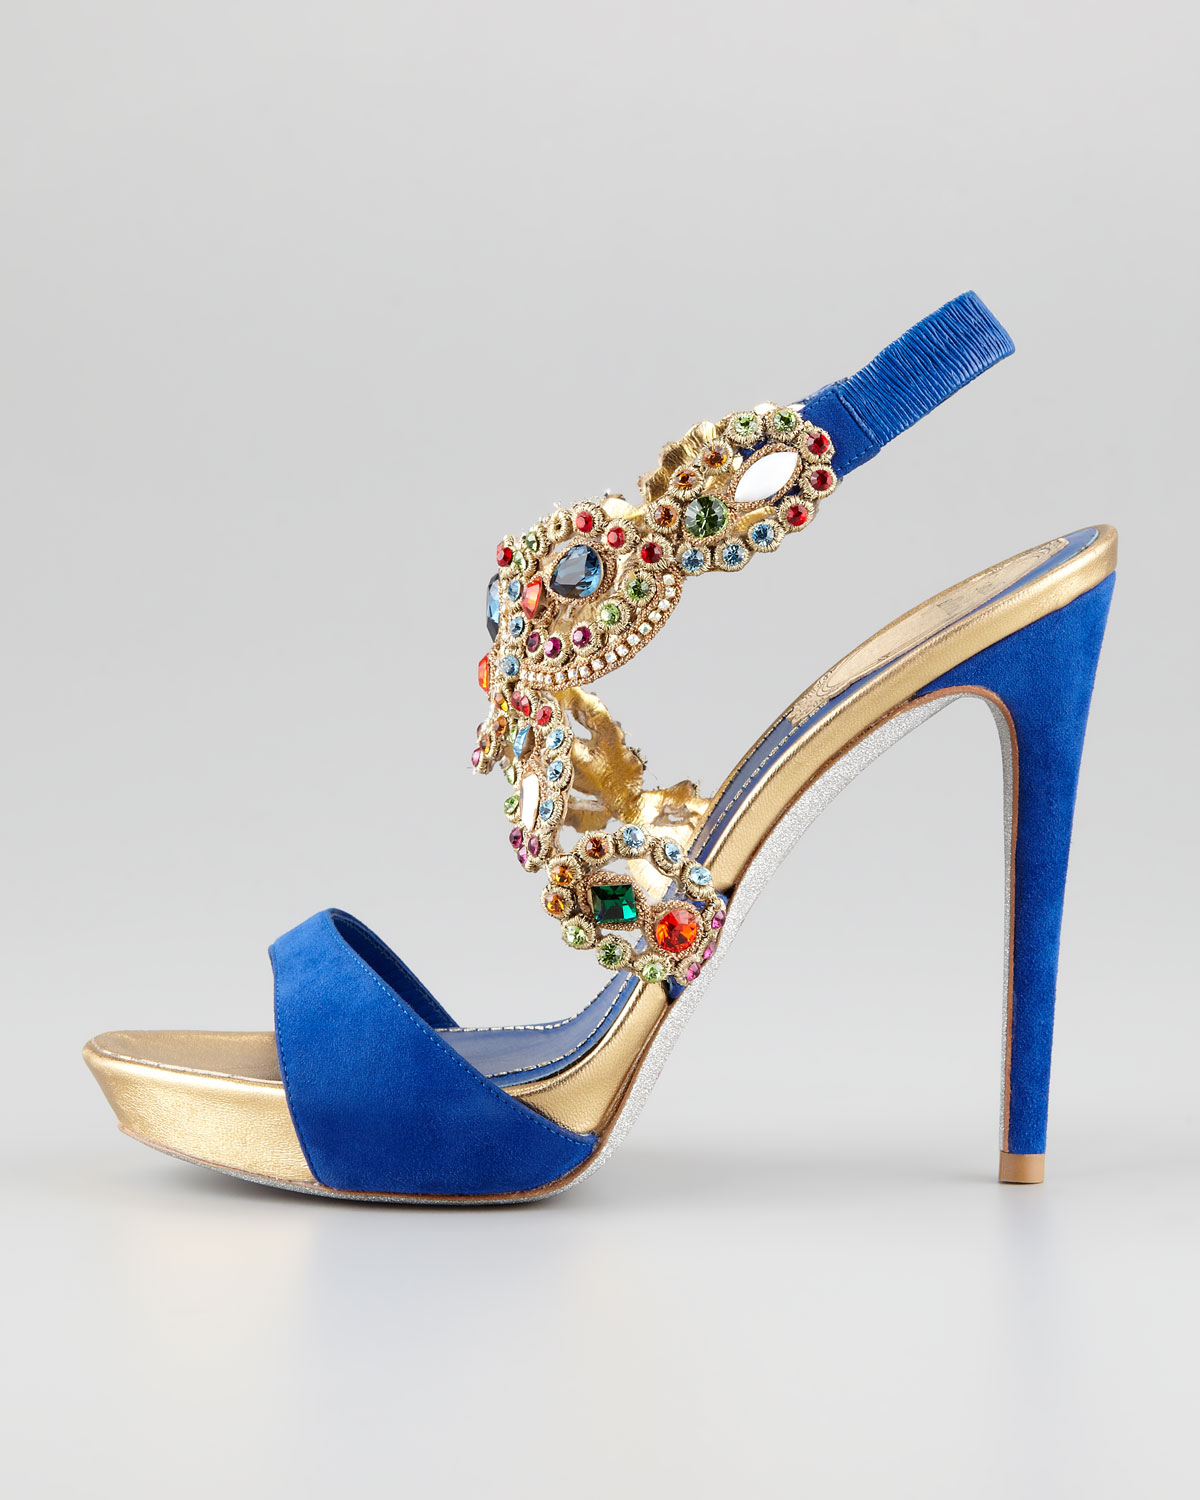 Lyst - Rene Caovilla Jeweled Anklewrap Platform Sandal in Blue